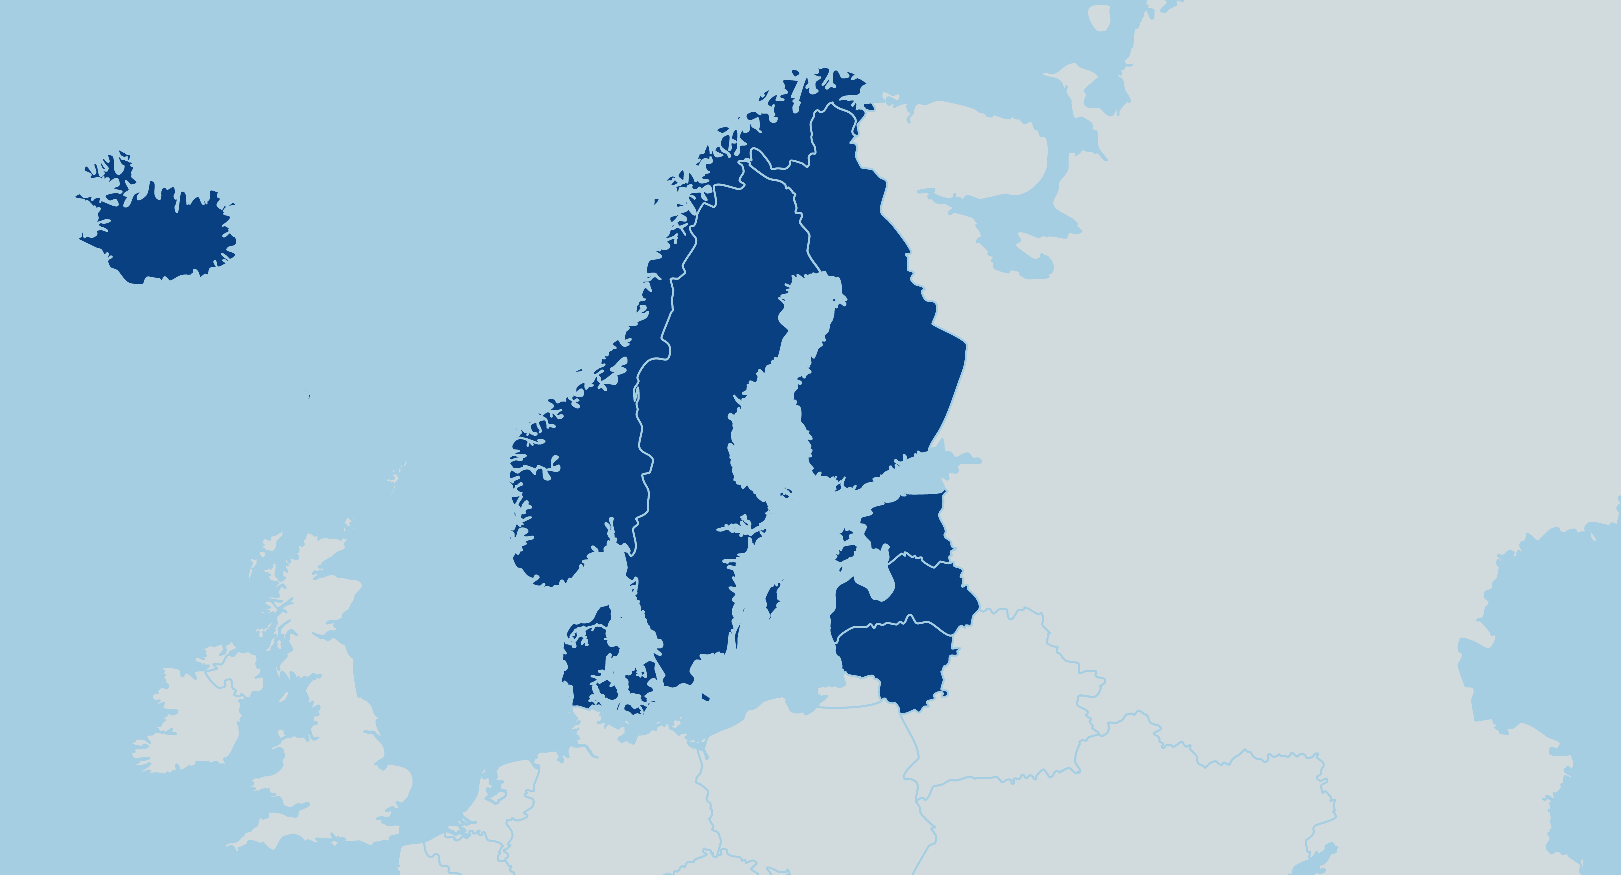 The Nordic-Baltic region